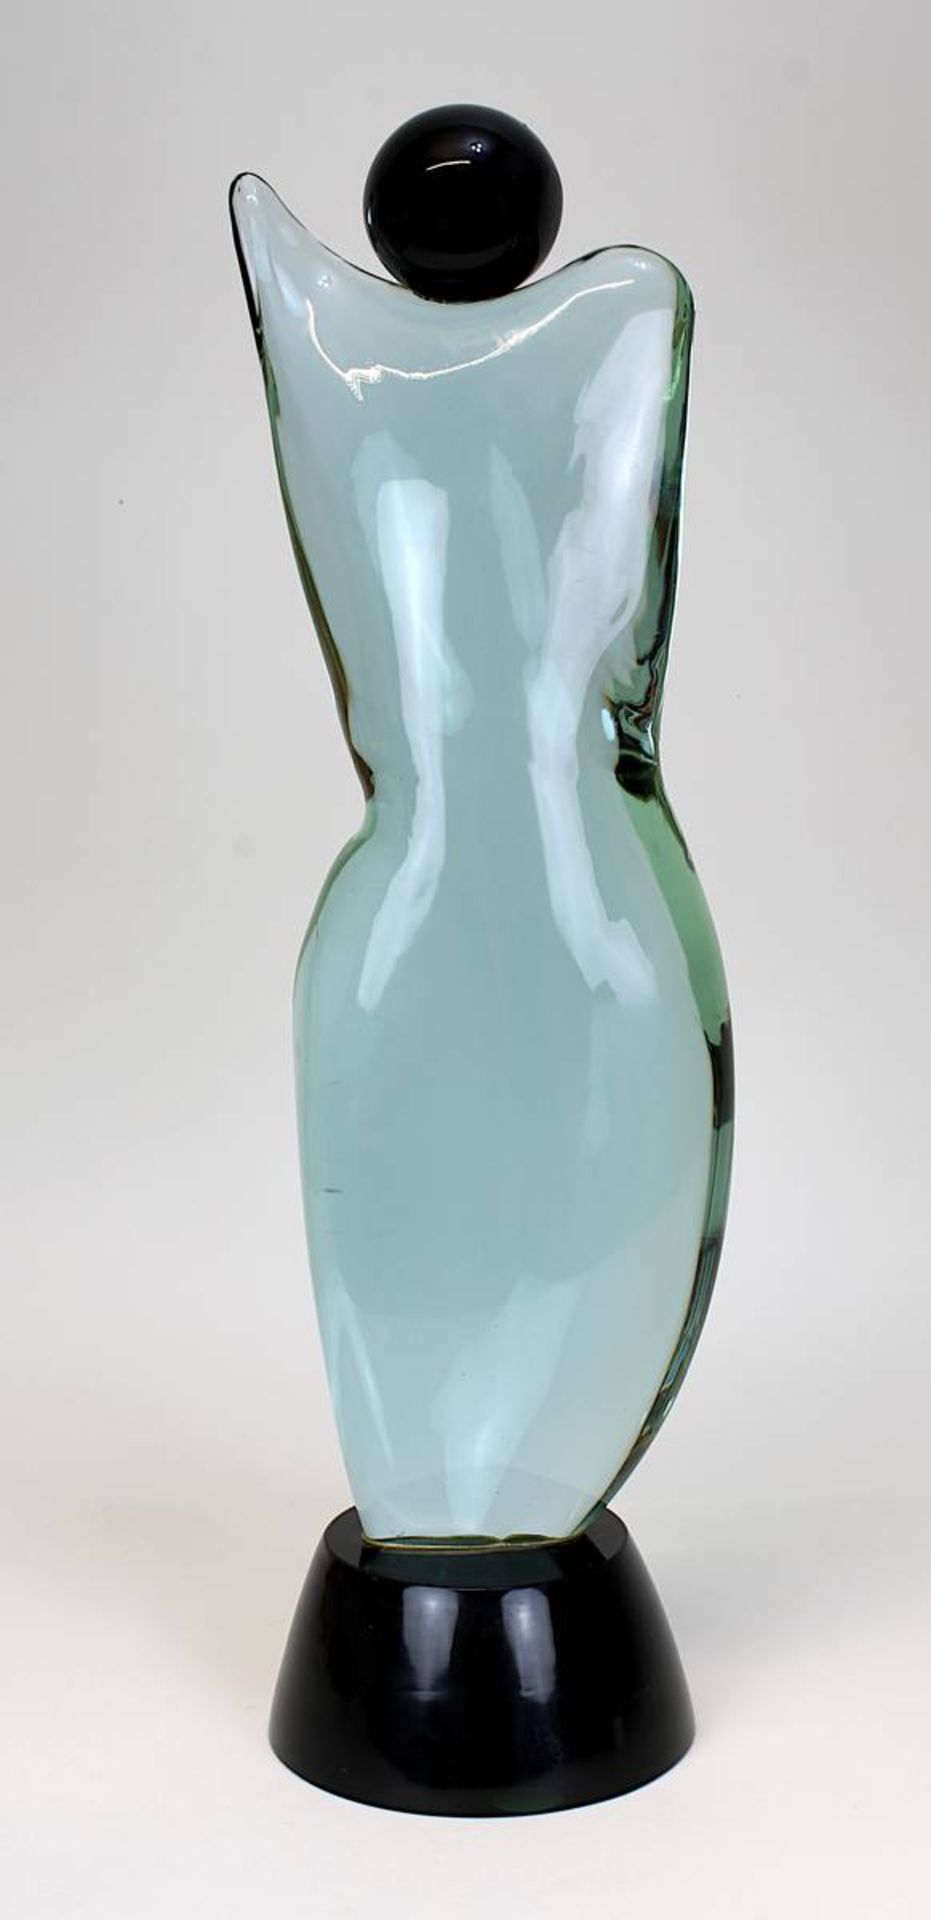 Antonio da Ros, Attr., Glasskulptur, Murano um 1960-70, Korpus aus durchgefärbtem Rauchglas, mit - Image 2 of 2